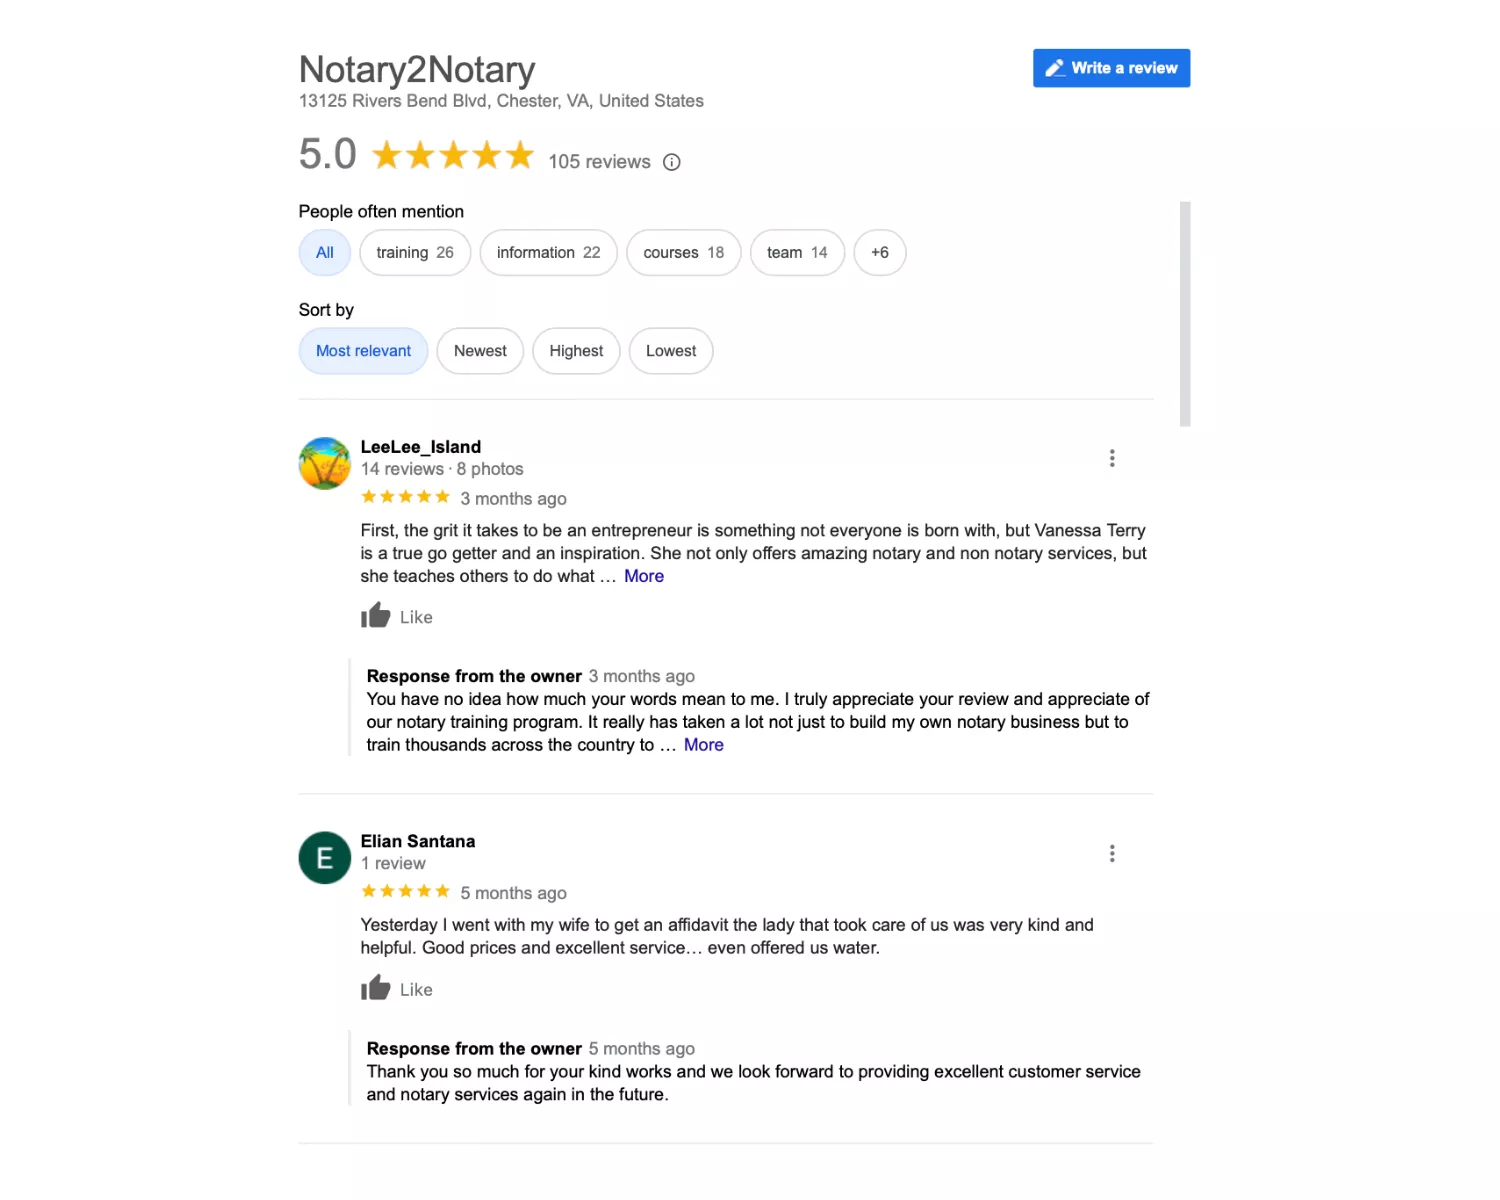 Notary2Notary Google reviews